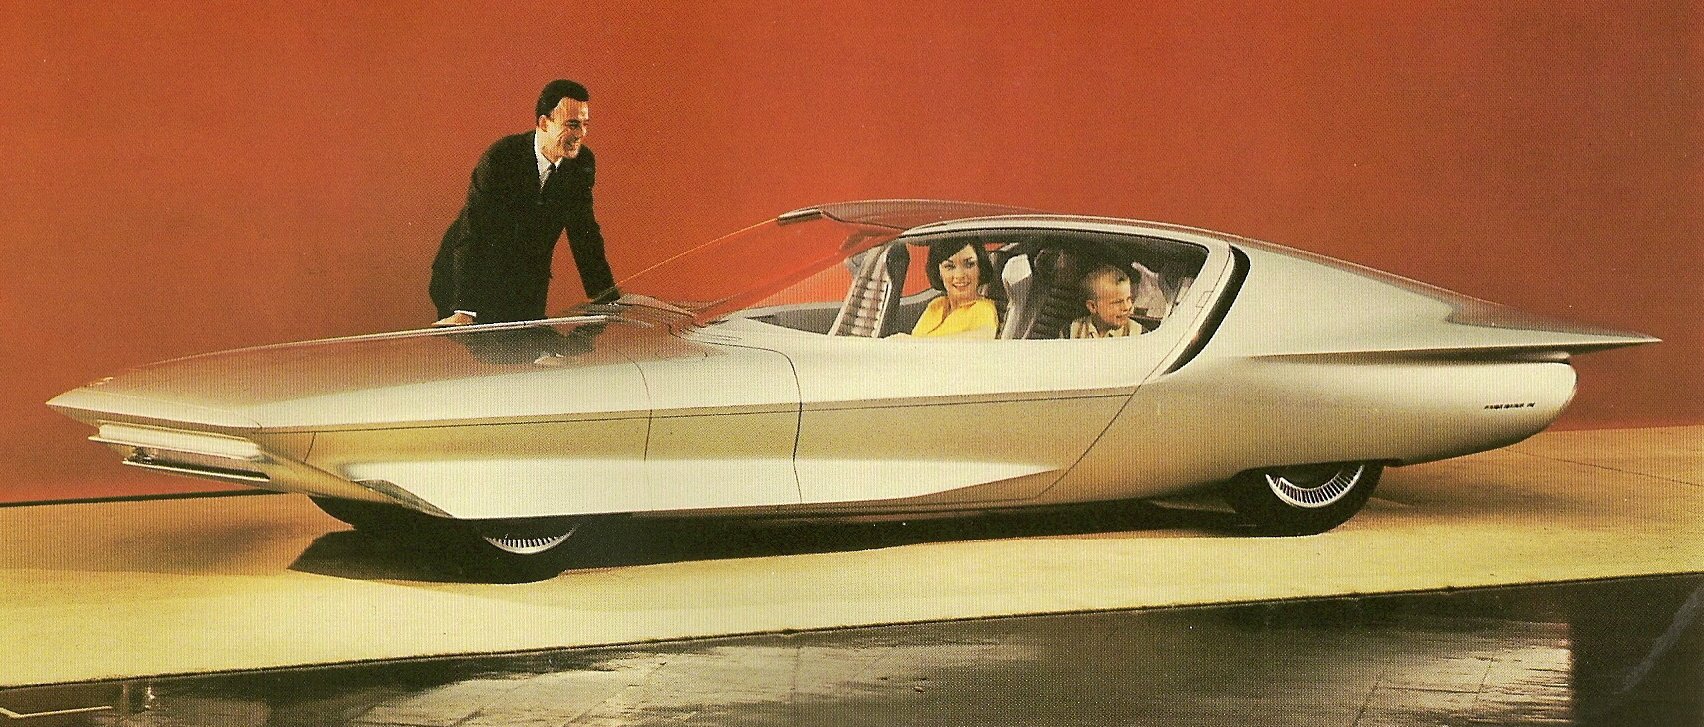 Buick Century Cruiser (Publicity photo of the original 1964 GM Firebird IV concept)